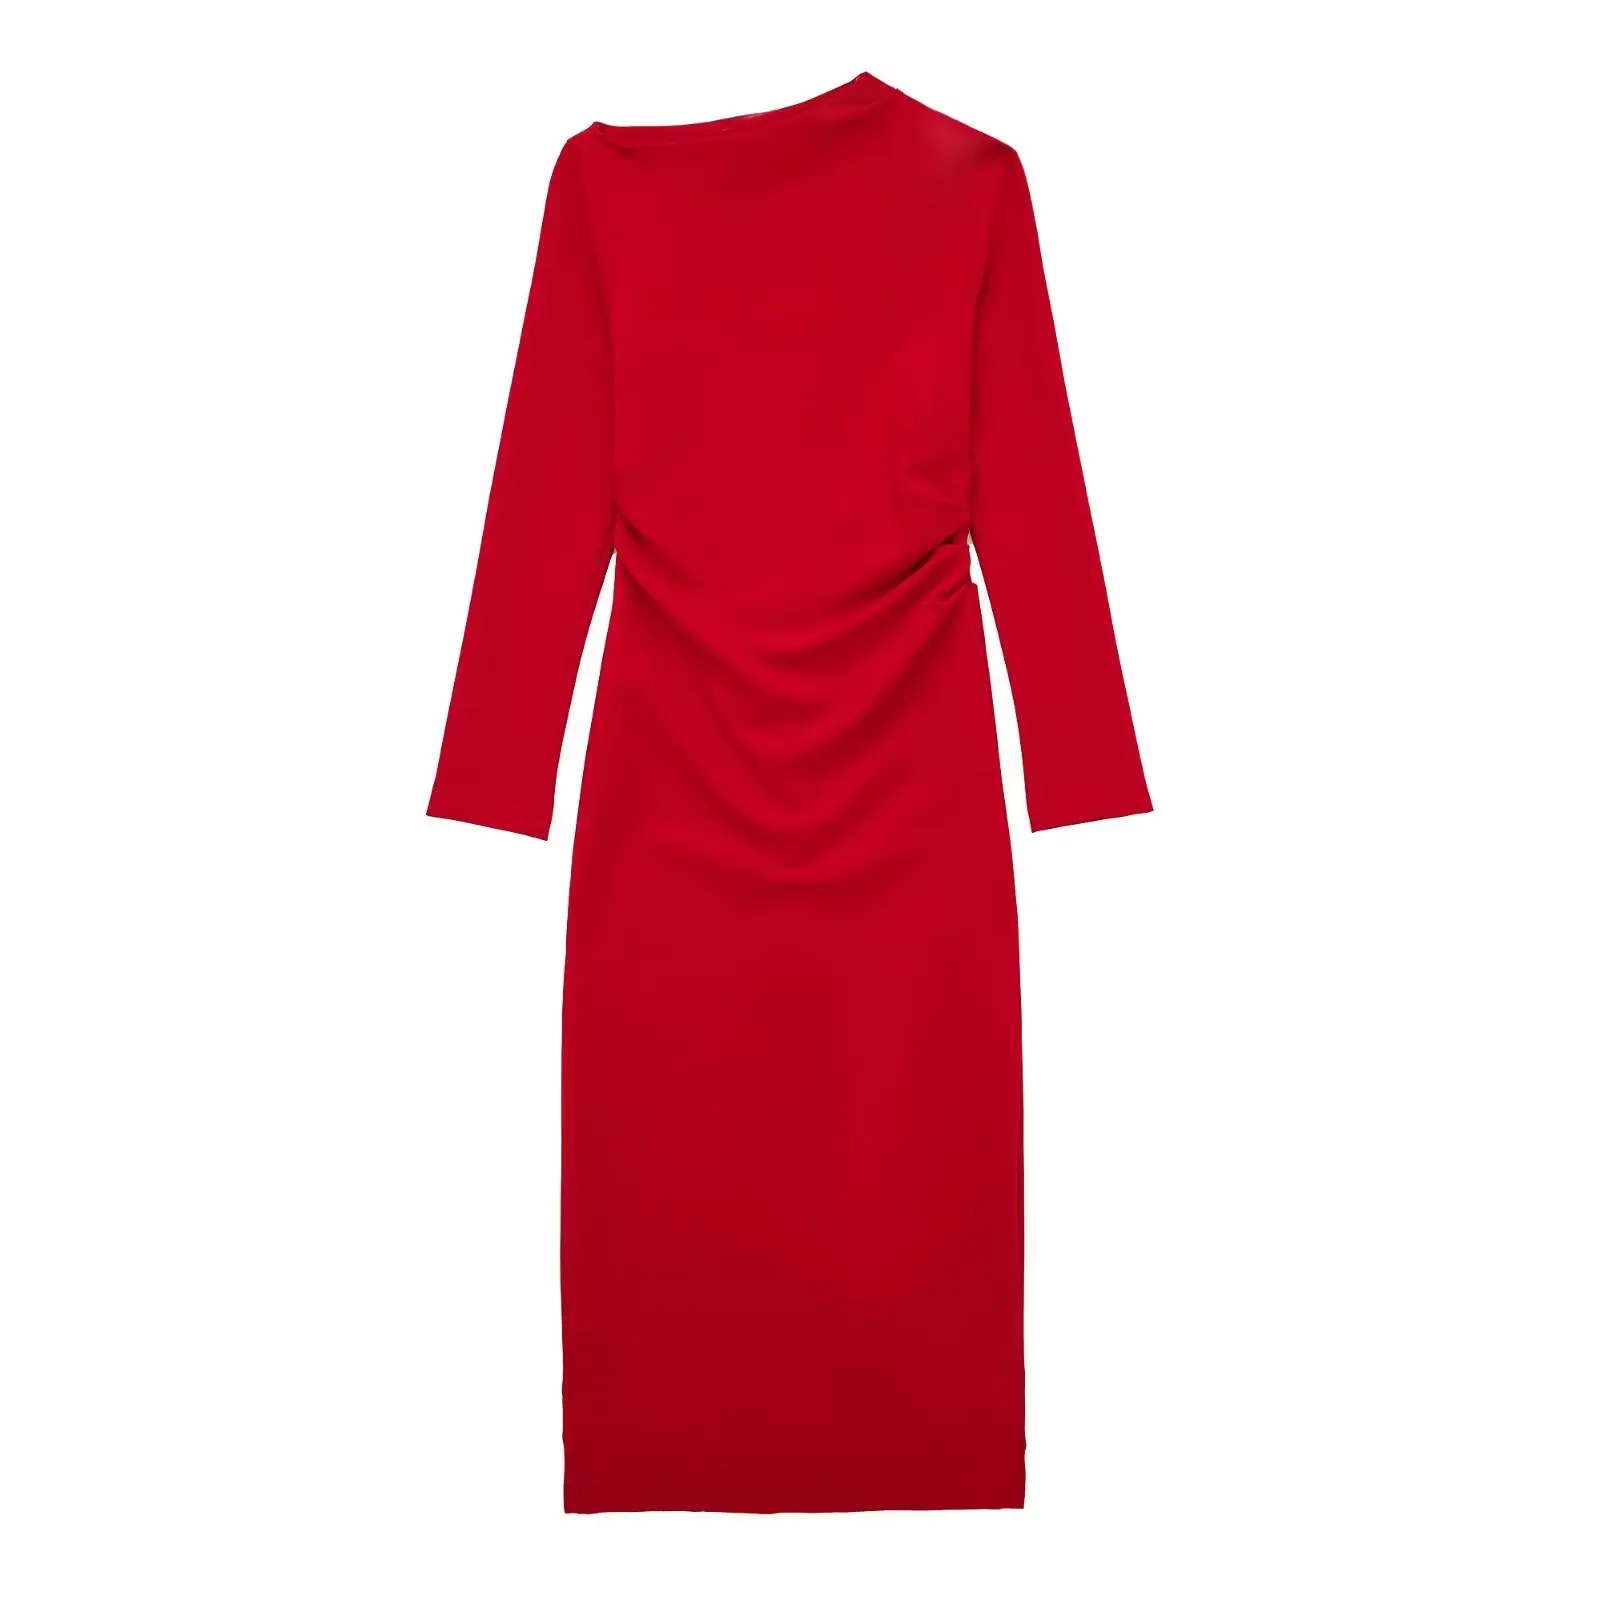 PB&ZA2022 Wholesale women's new asymmetrical neckline red mini dress skirt pleated decorative shift dress 8911465